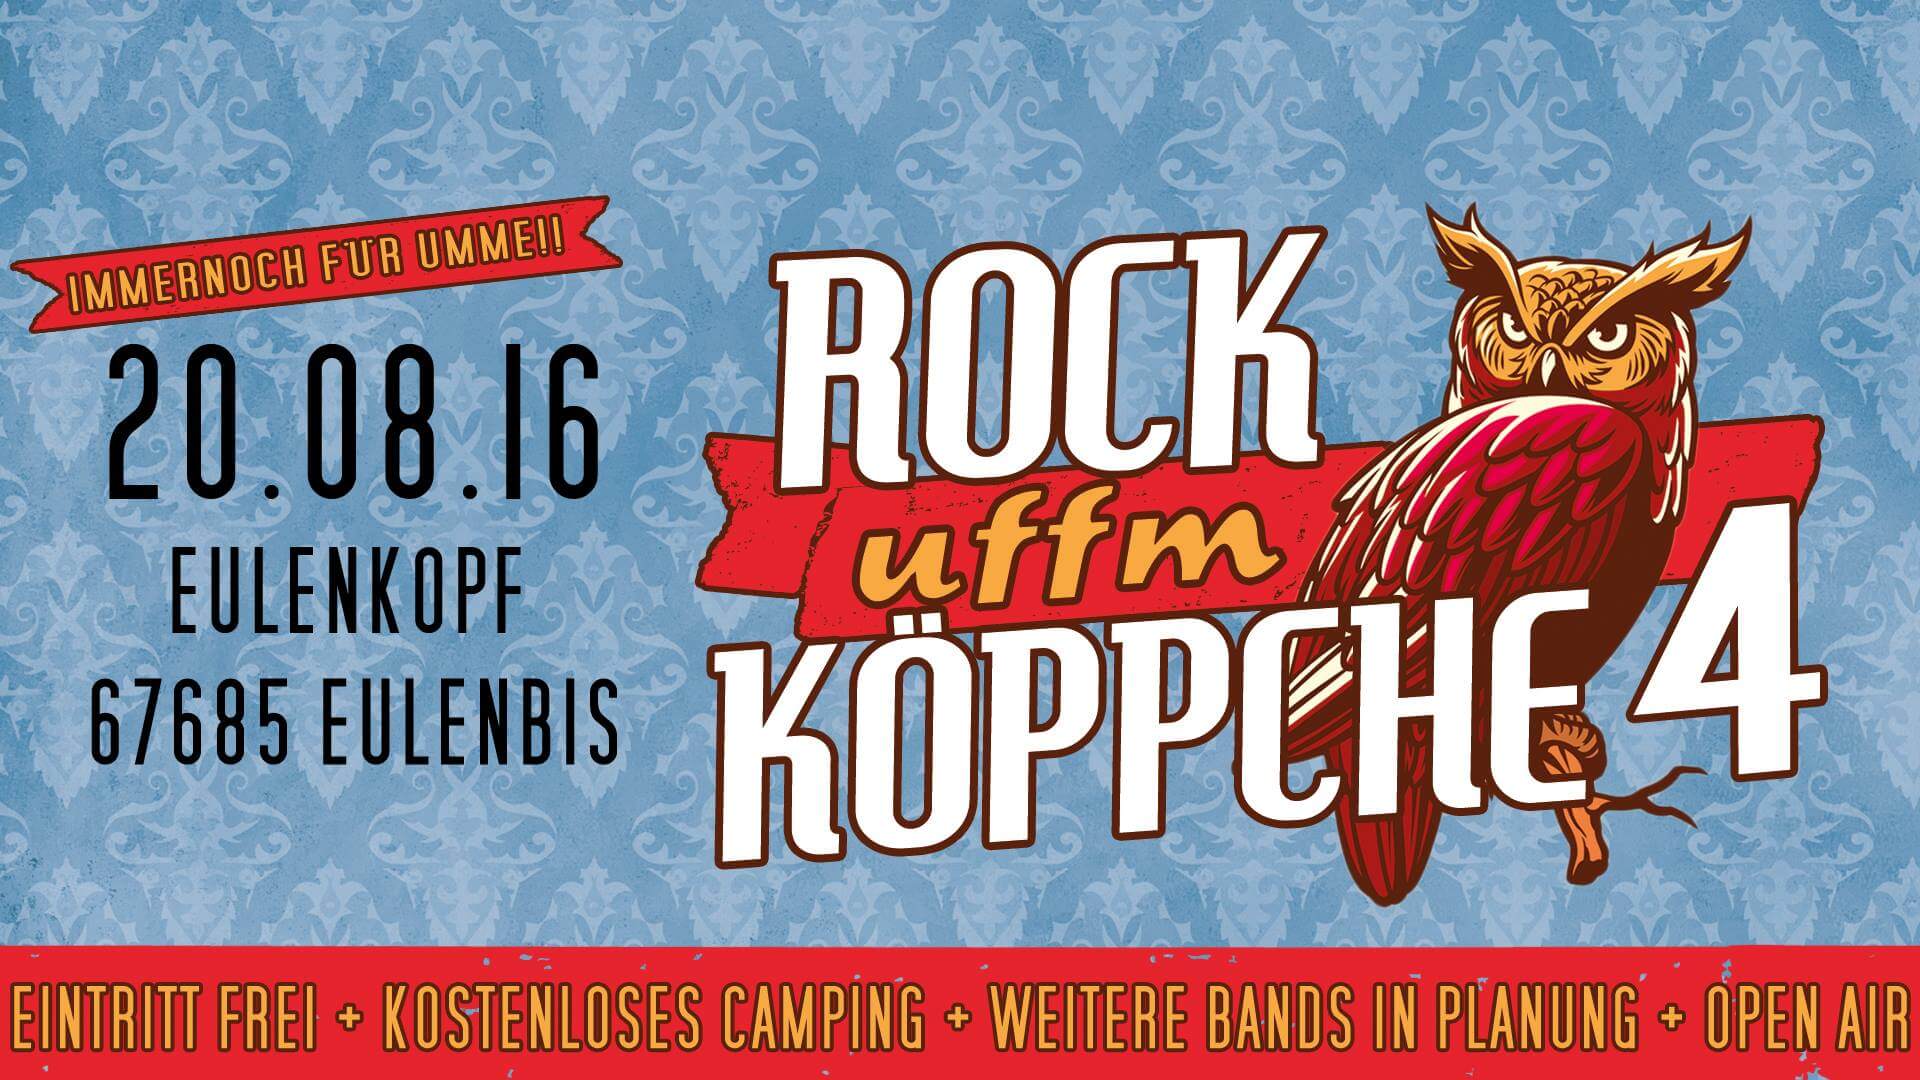 Rock uffm Köppche Vol. 4